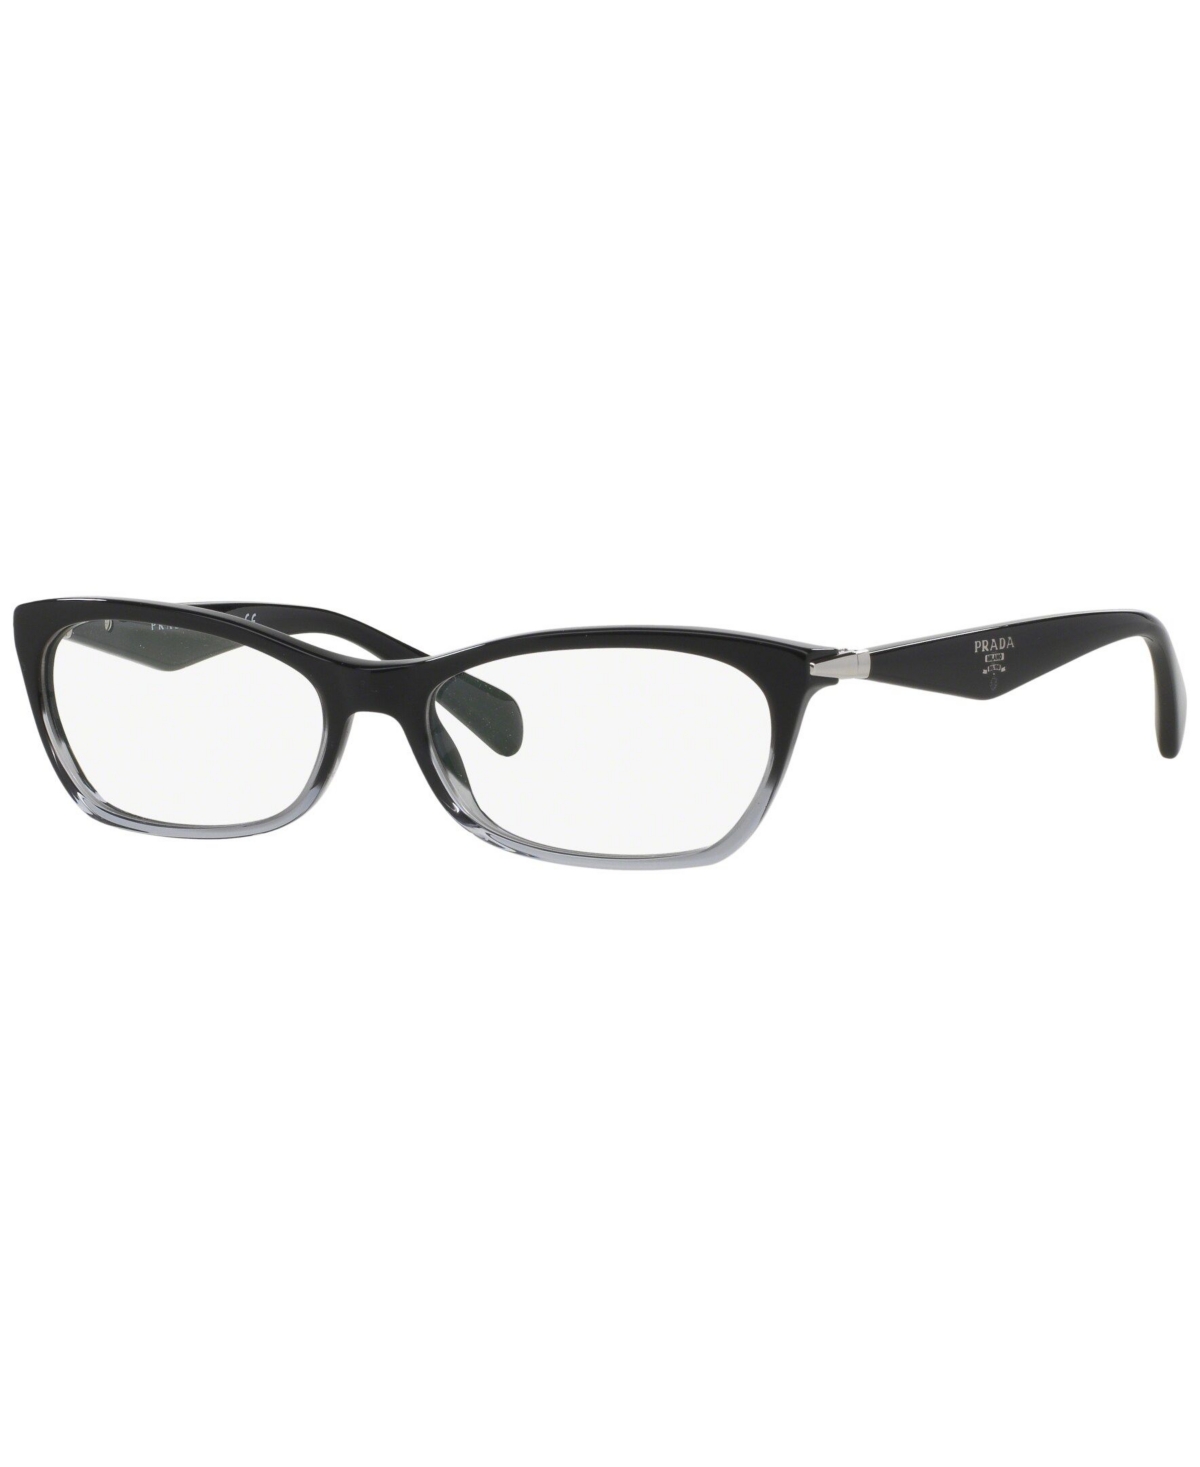 Pr 15PV Women's Irregular Eyeglasses - Black Grad